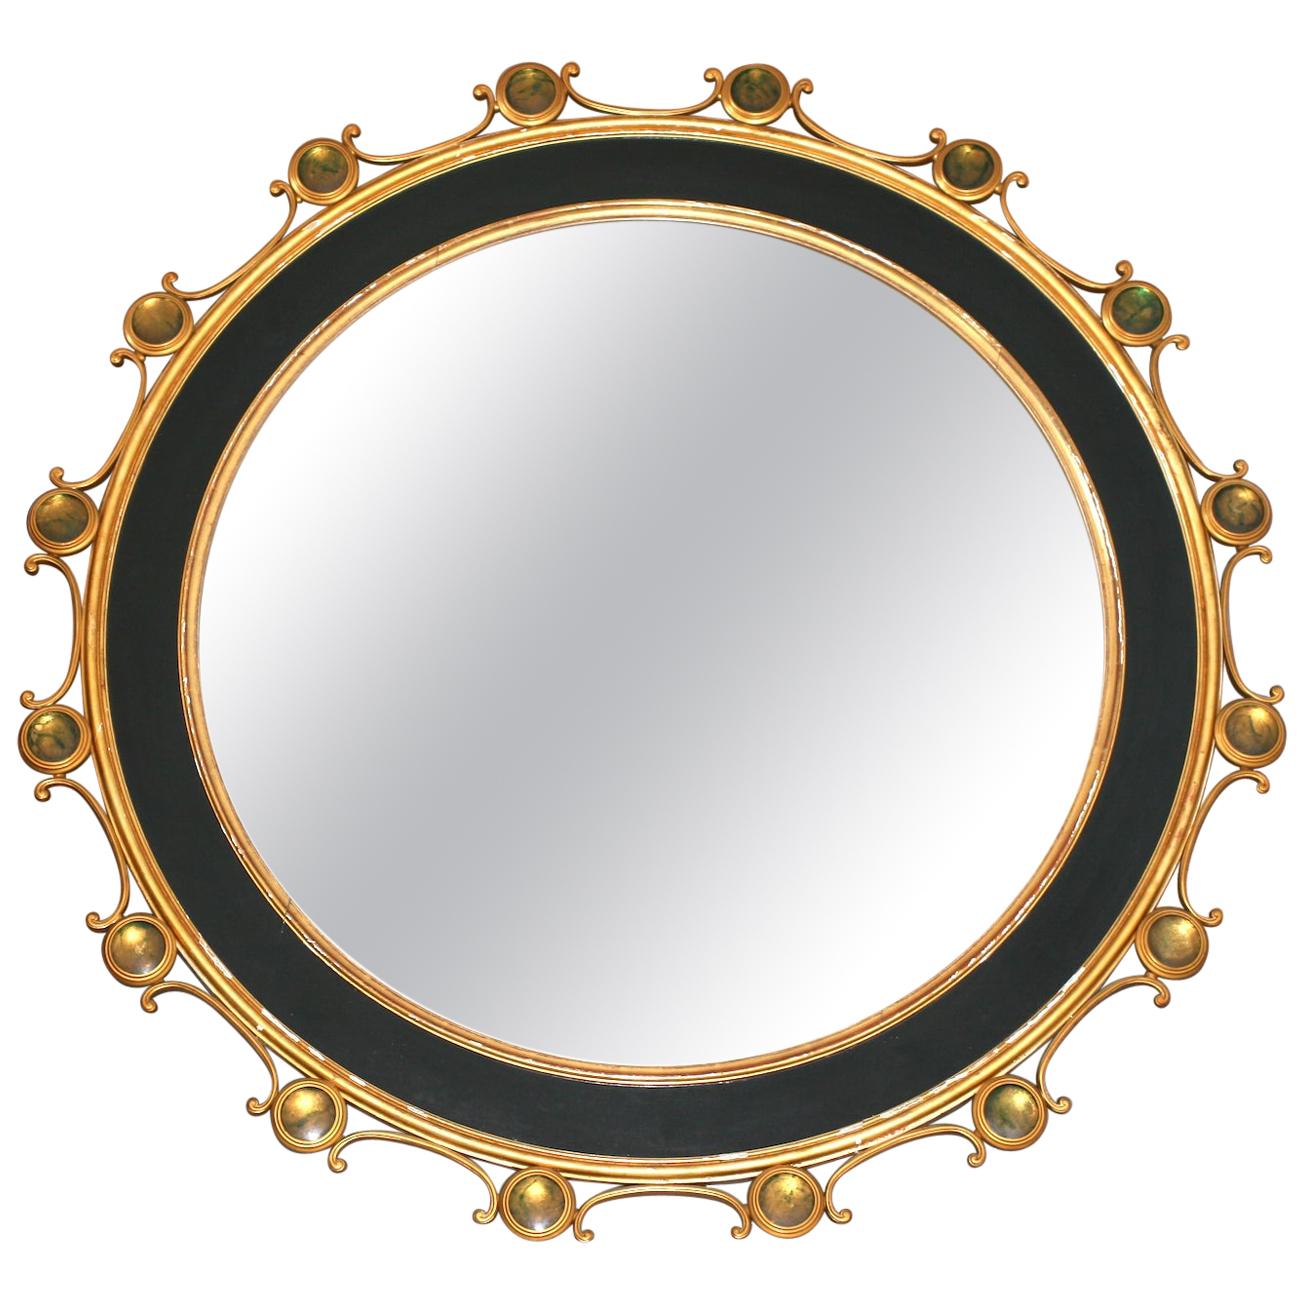 French Midcentury Mirror, Attributed to Jansen